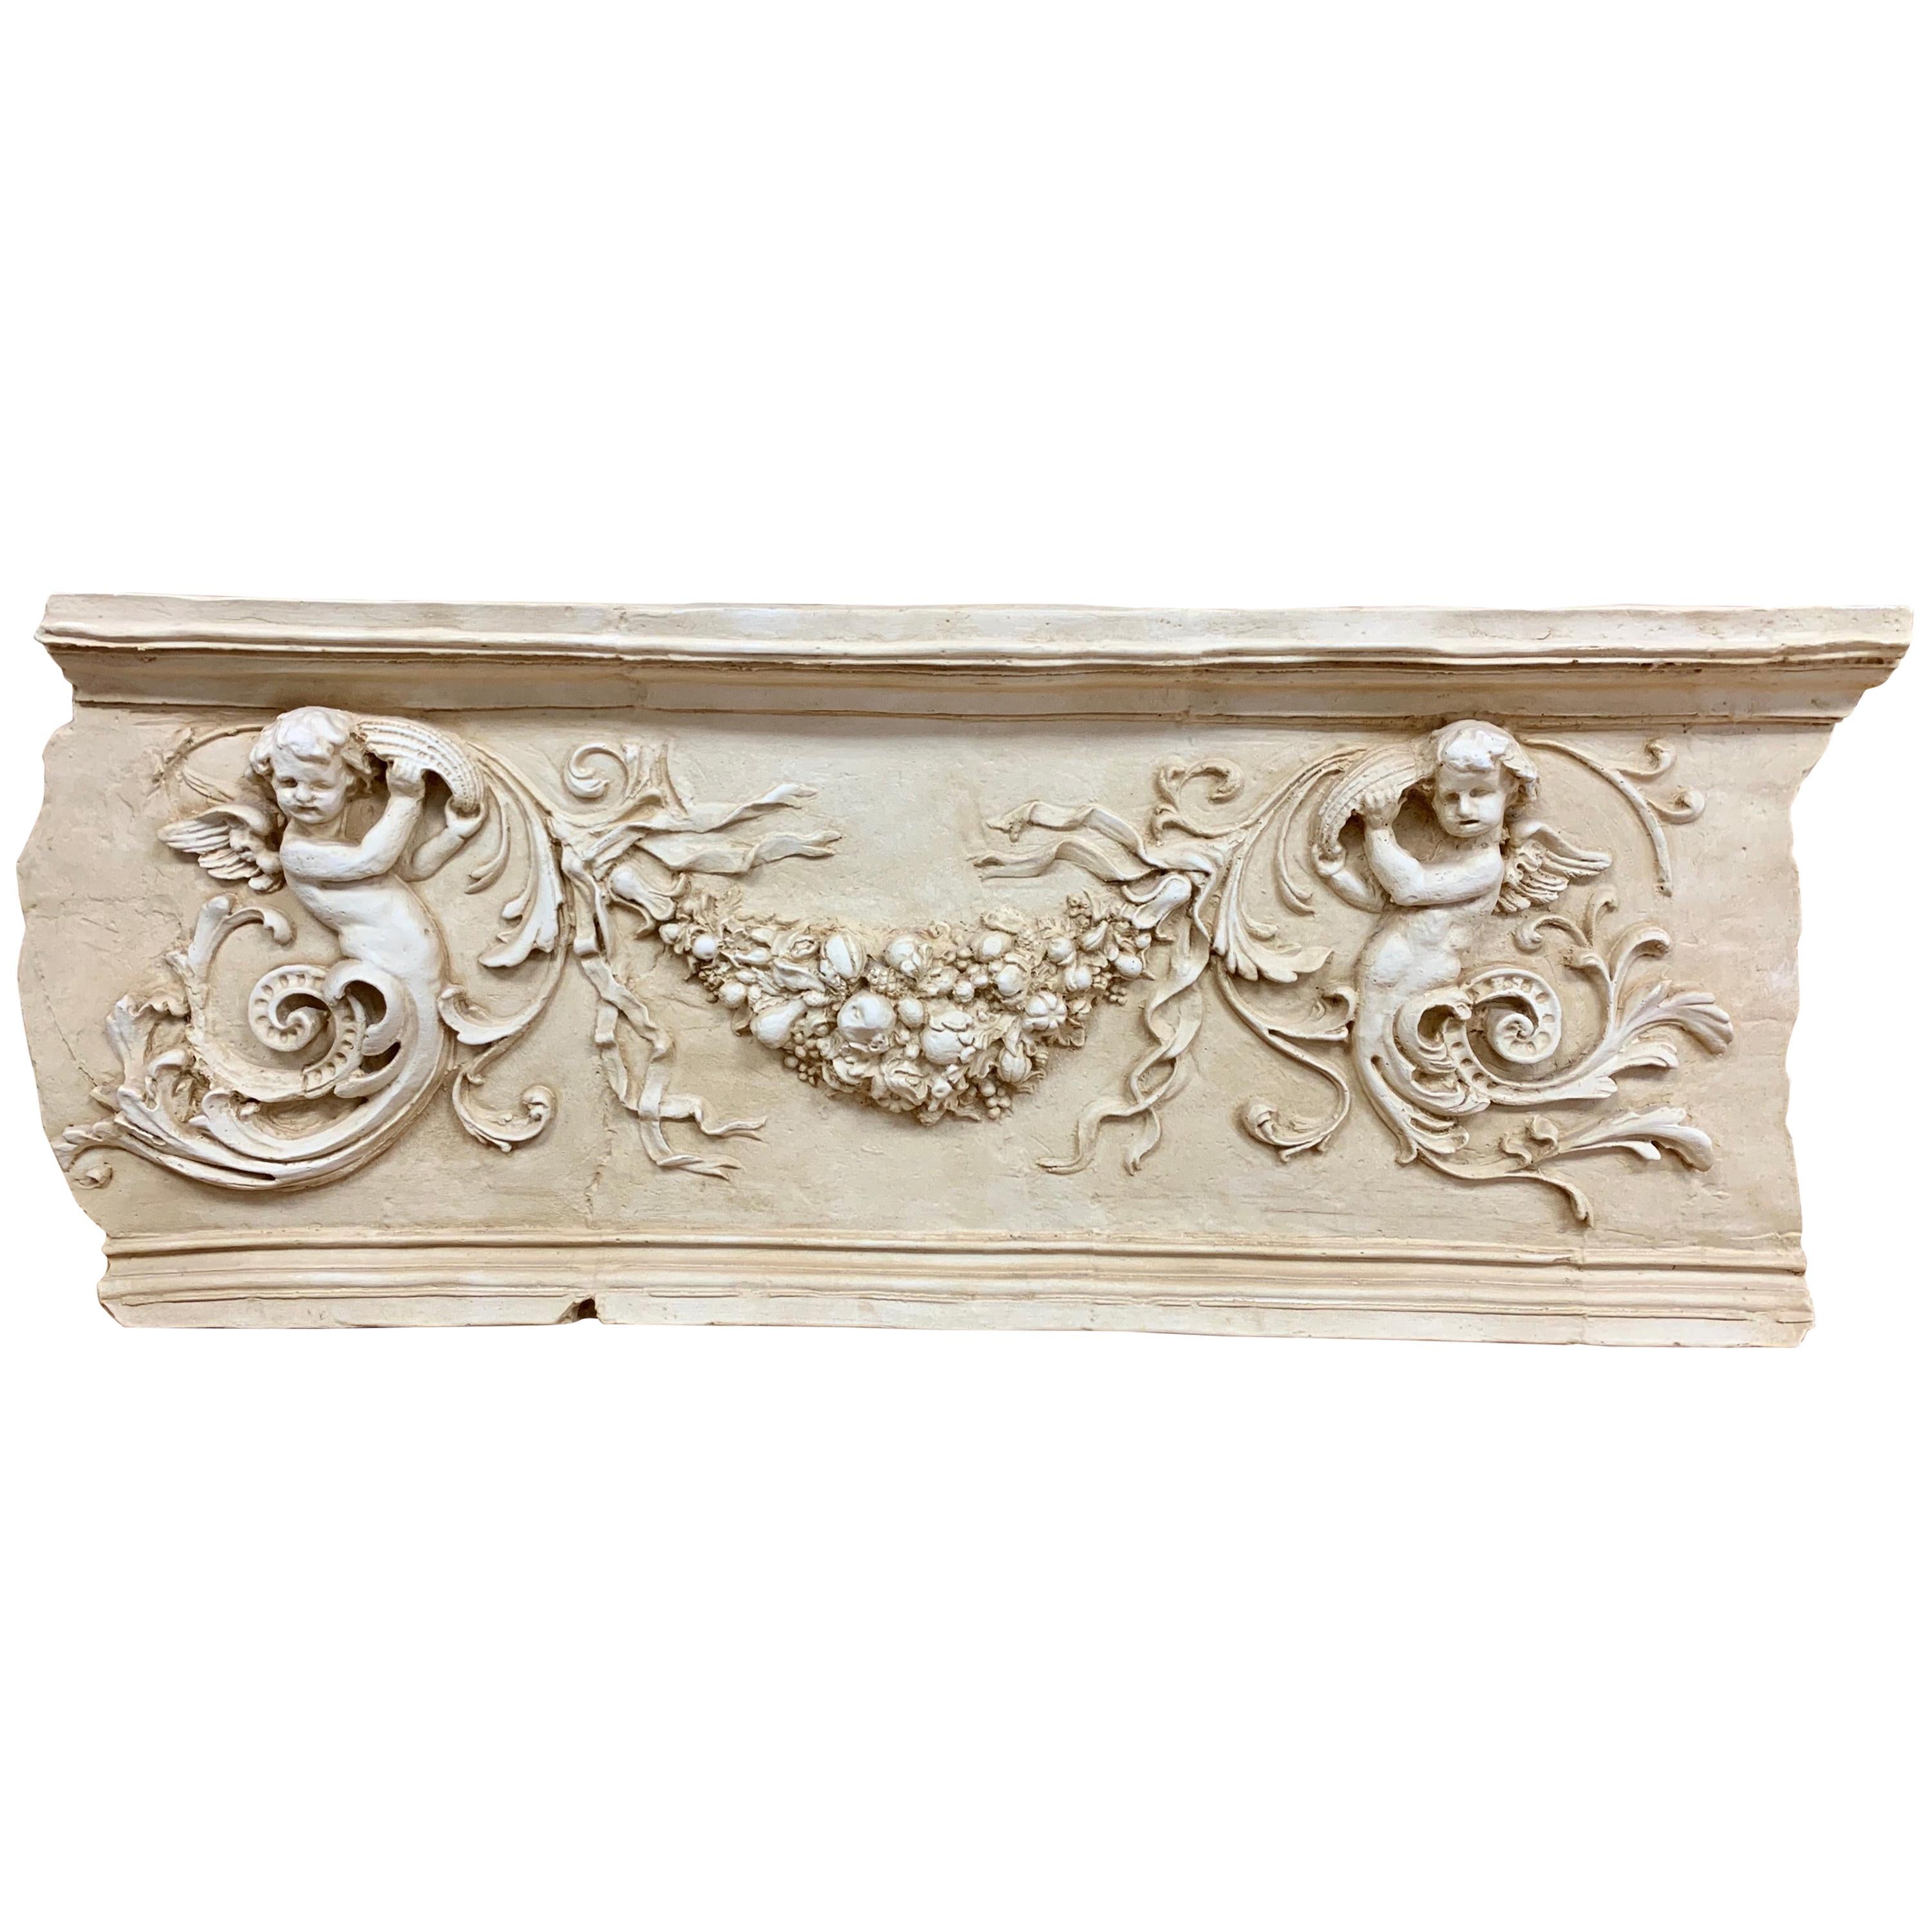 Impressive Neoclassical Carved Putti Architectural Relief Plaque